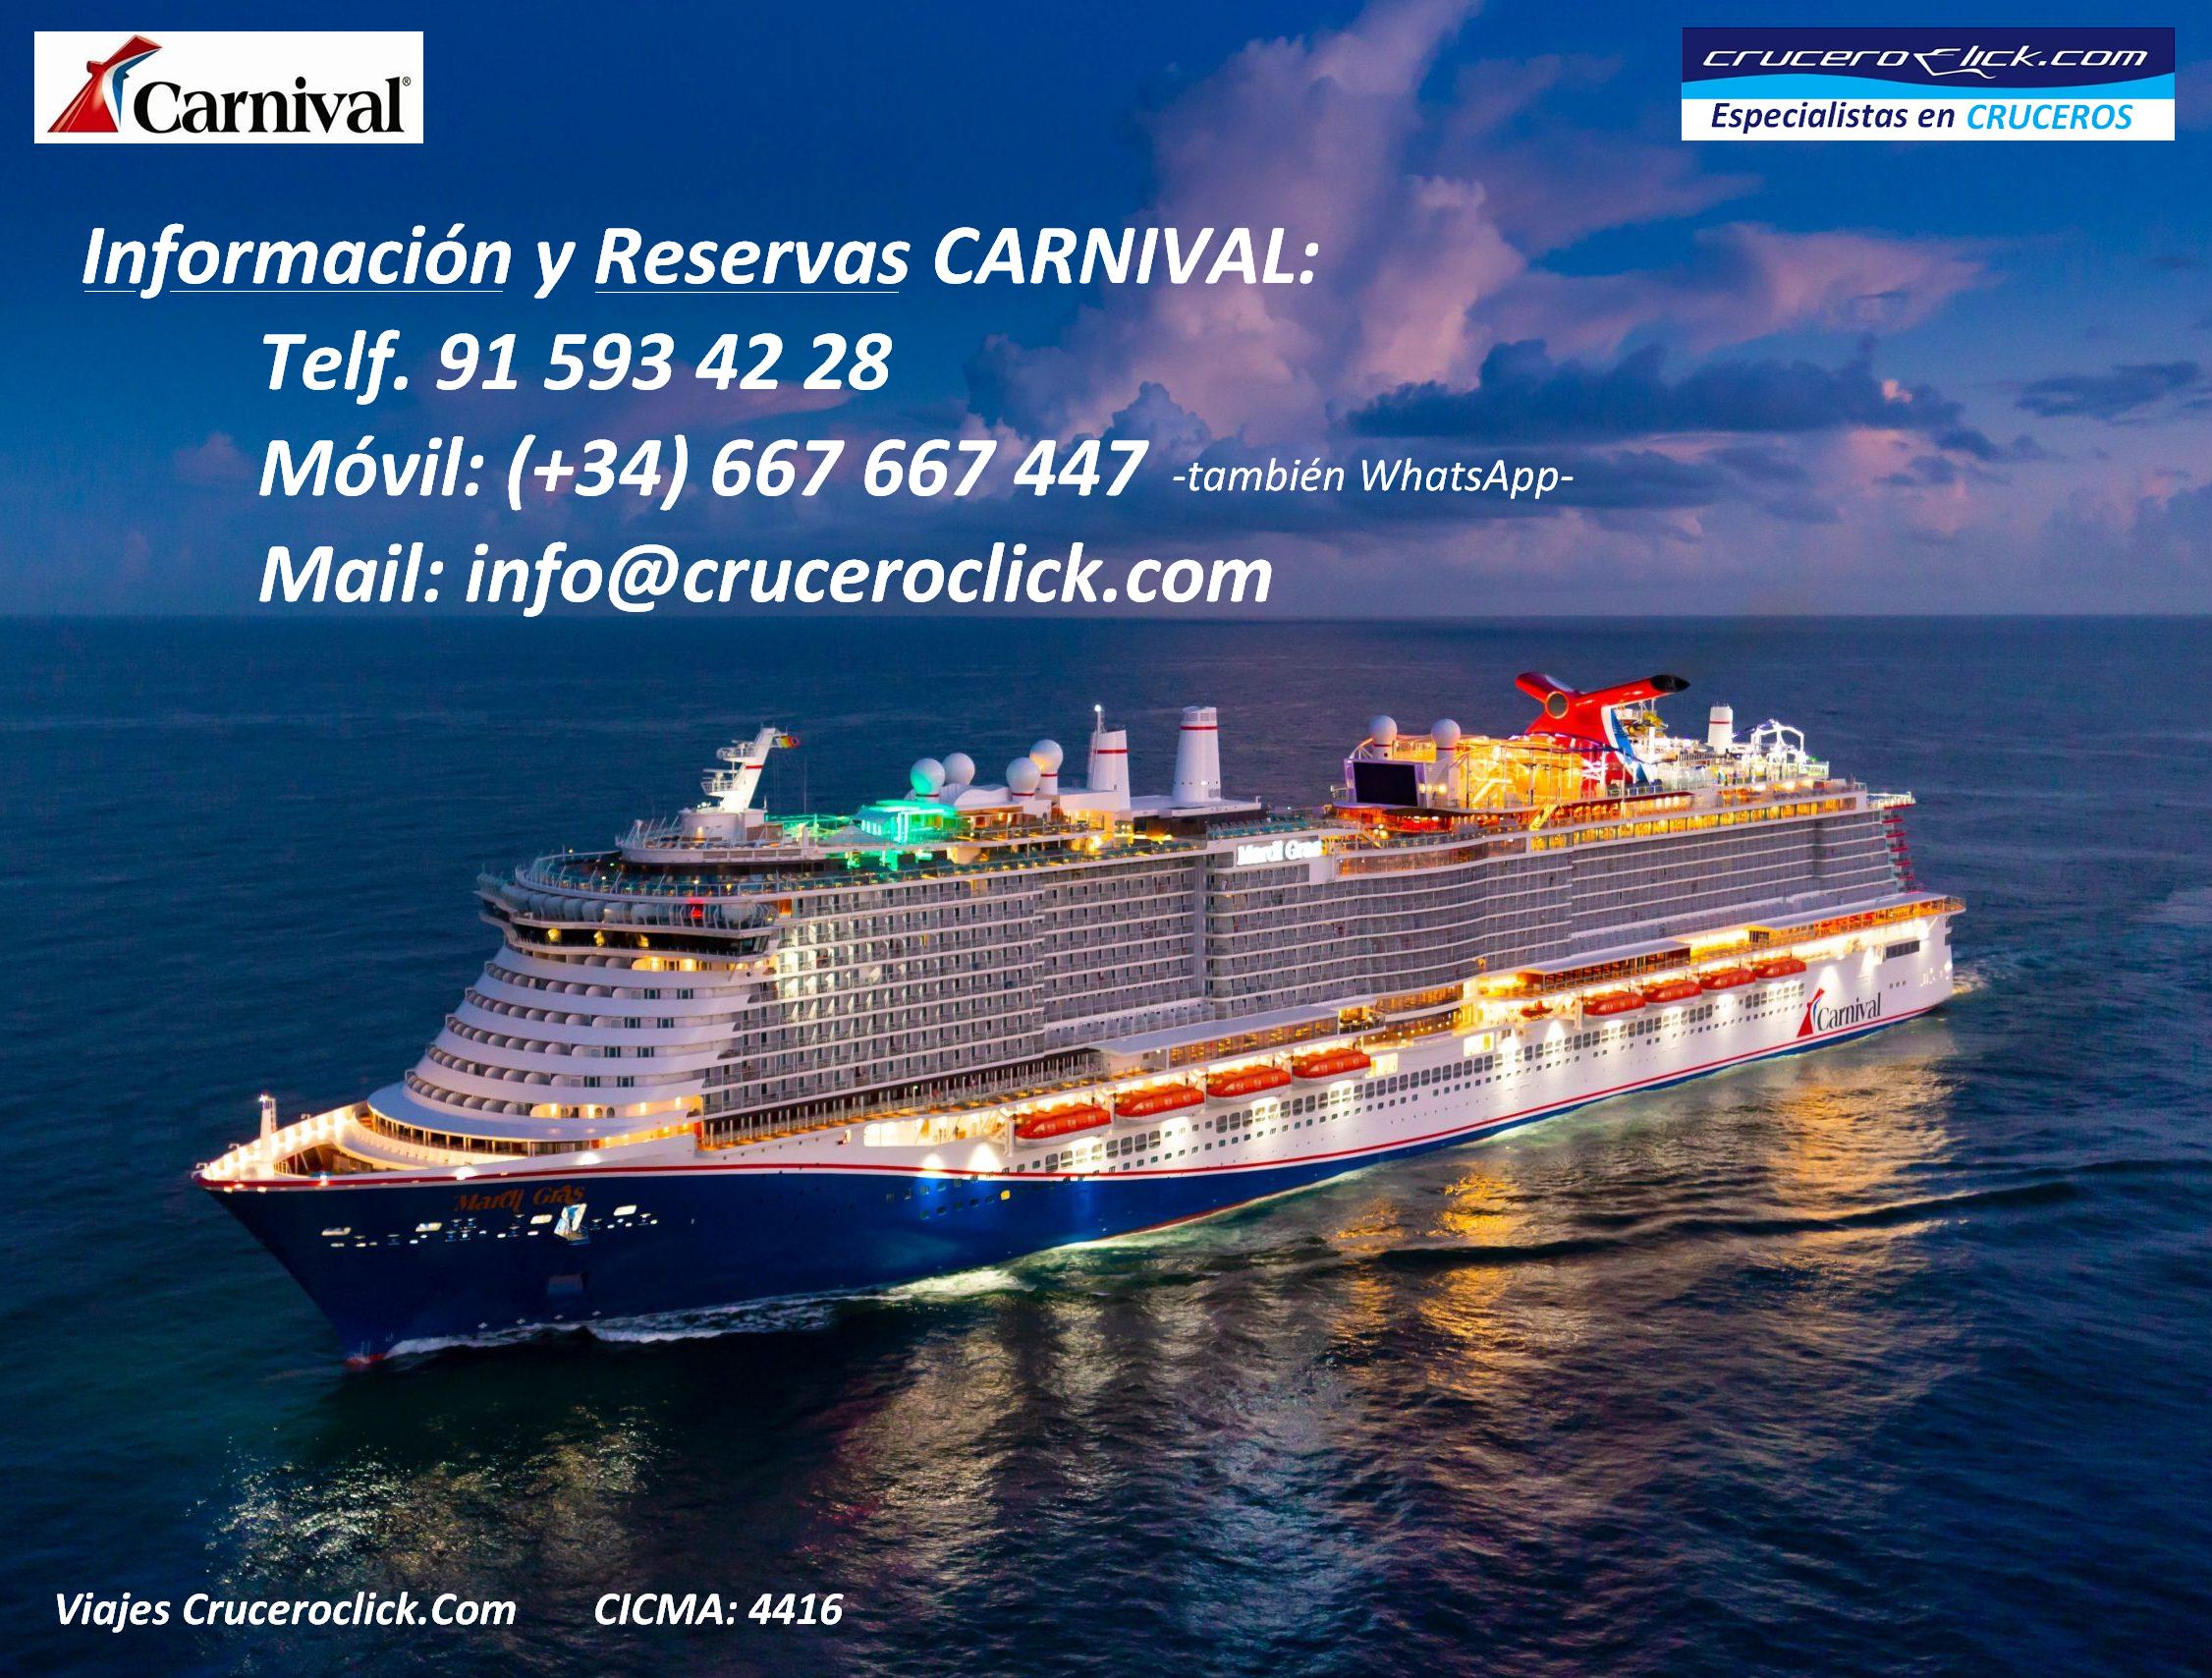 CARNIVAL CRUISES CRUCEROS CARIBE CRUCEROS MEDITERRANEO CRUCEROS HAWAII CRUCEROS MEXICO CRUCEROS BAHAMAS CARNIVAL CRUISES CARIBBEAN CRUISES #CarnivalCruises #Carnival #FunShips #Cruises #Caribe #CrucerosCaribe 